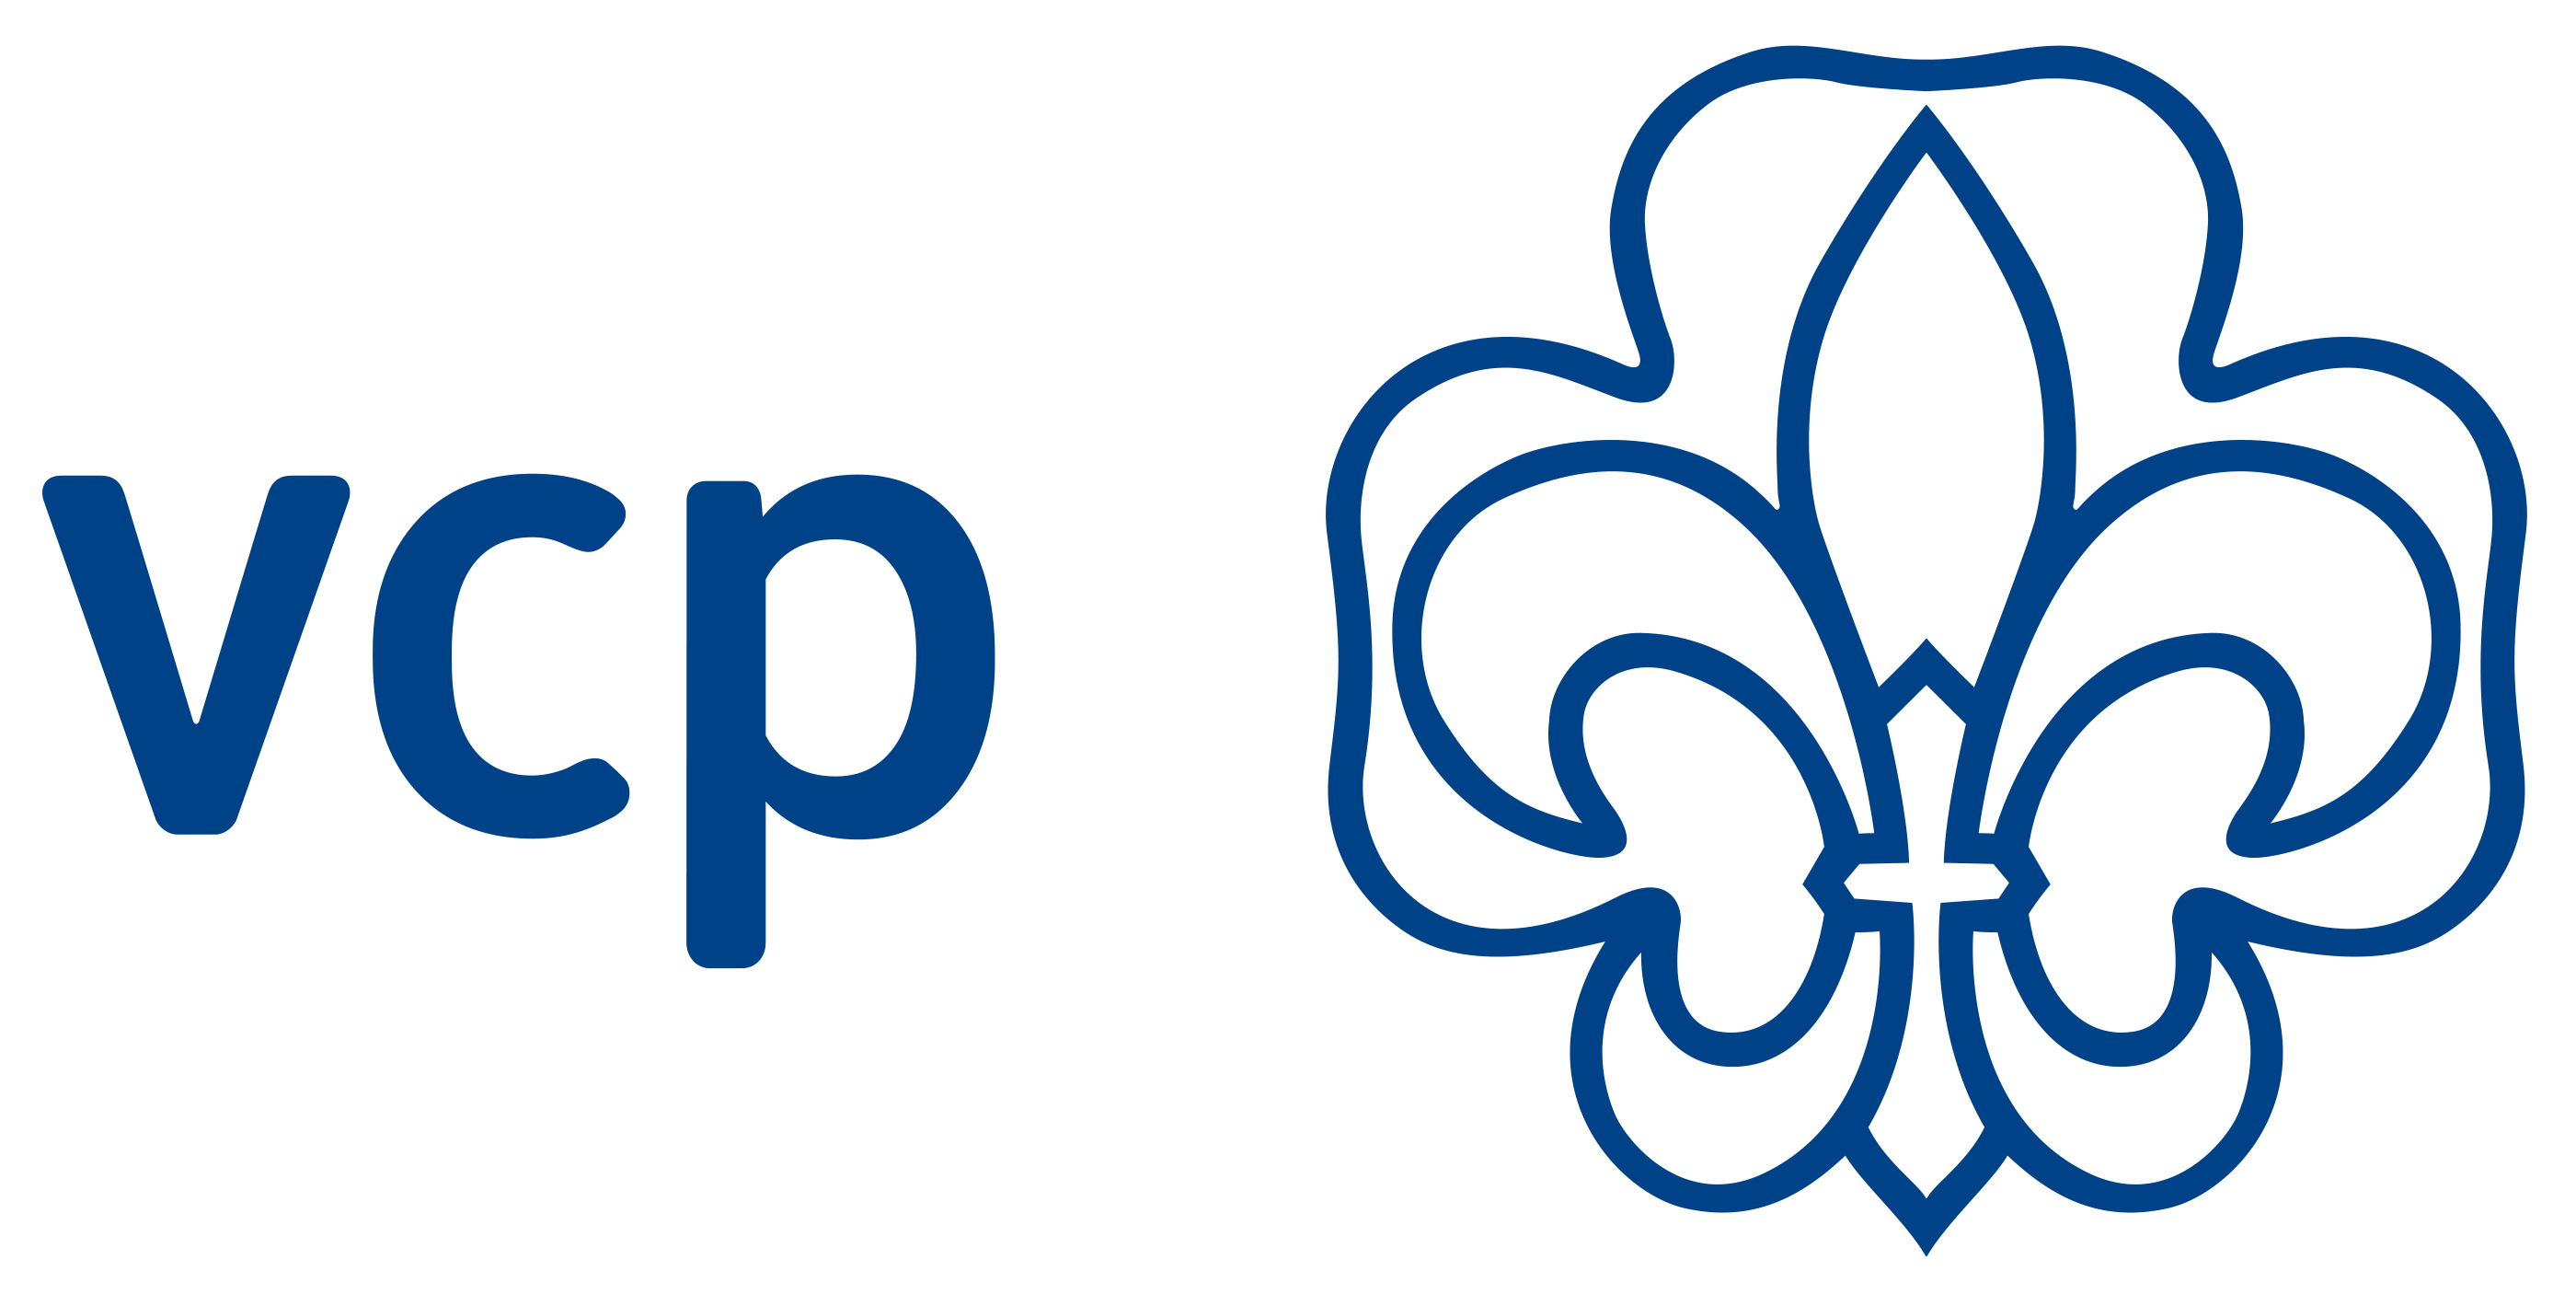 vcp-logo-transparent-vcp-blau-rgb.png